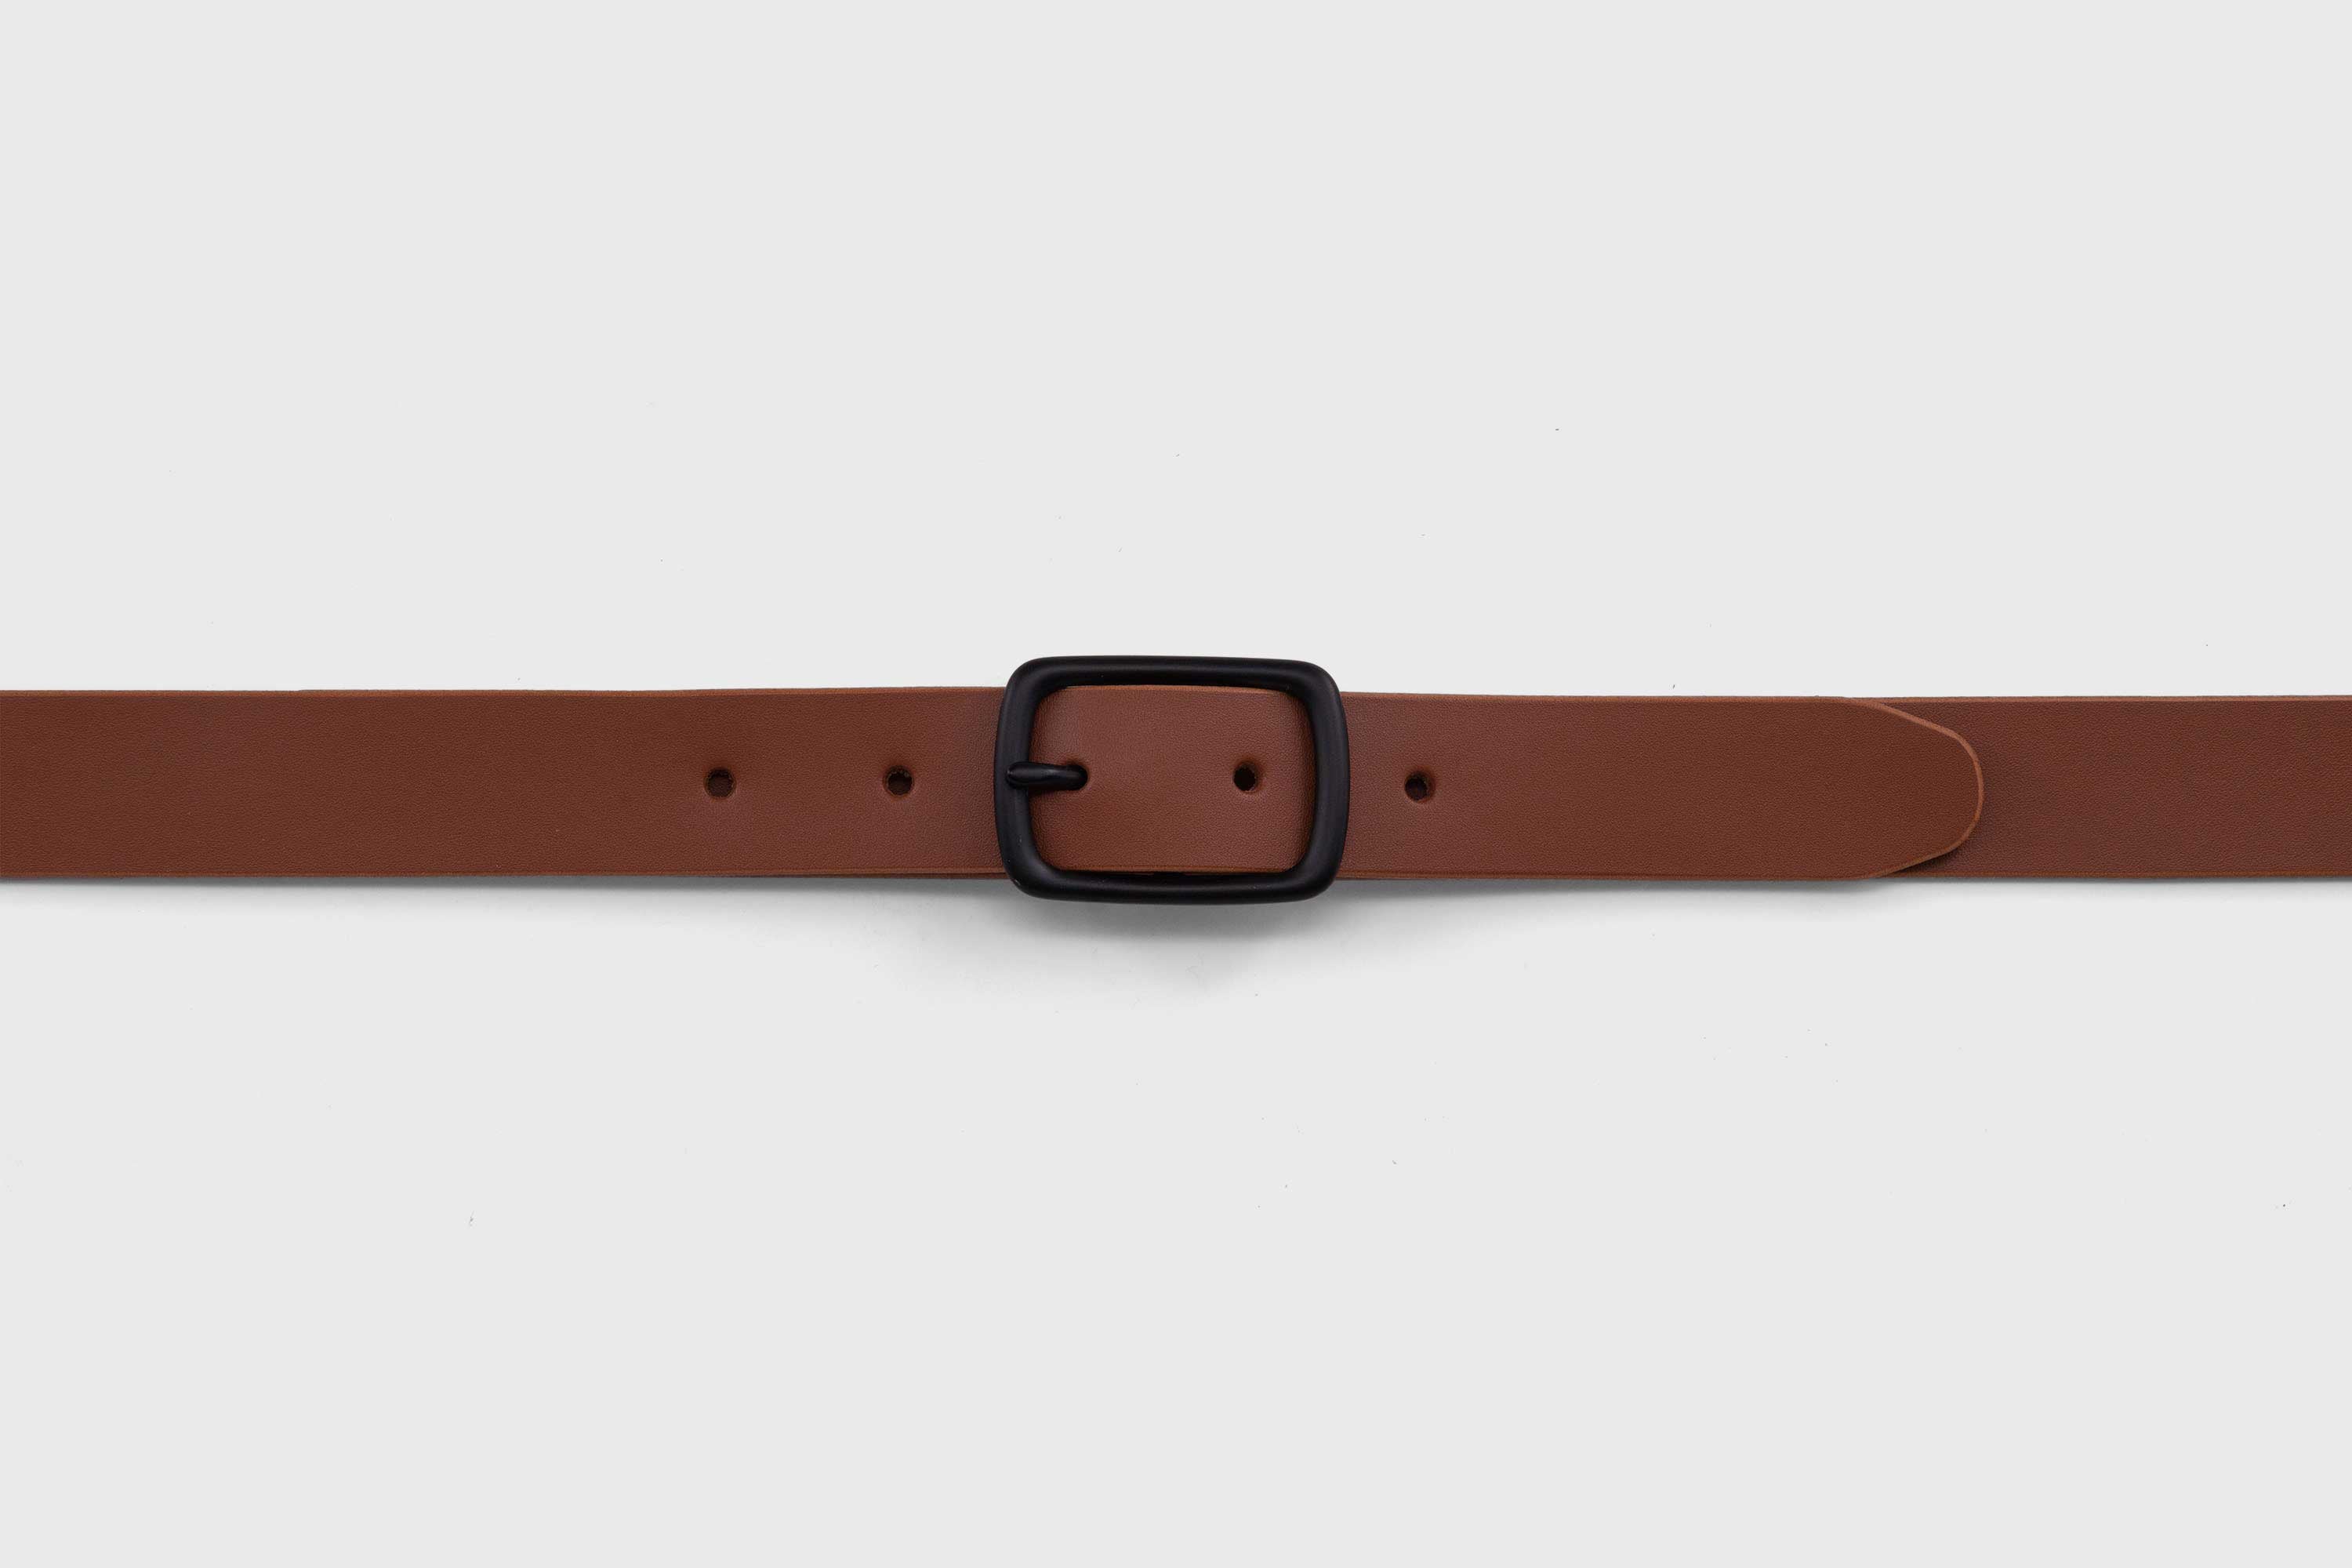 minimalist style vachetta Tan brown Leather watch strap